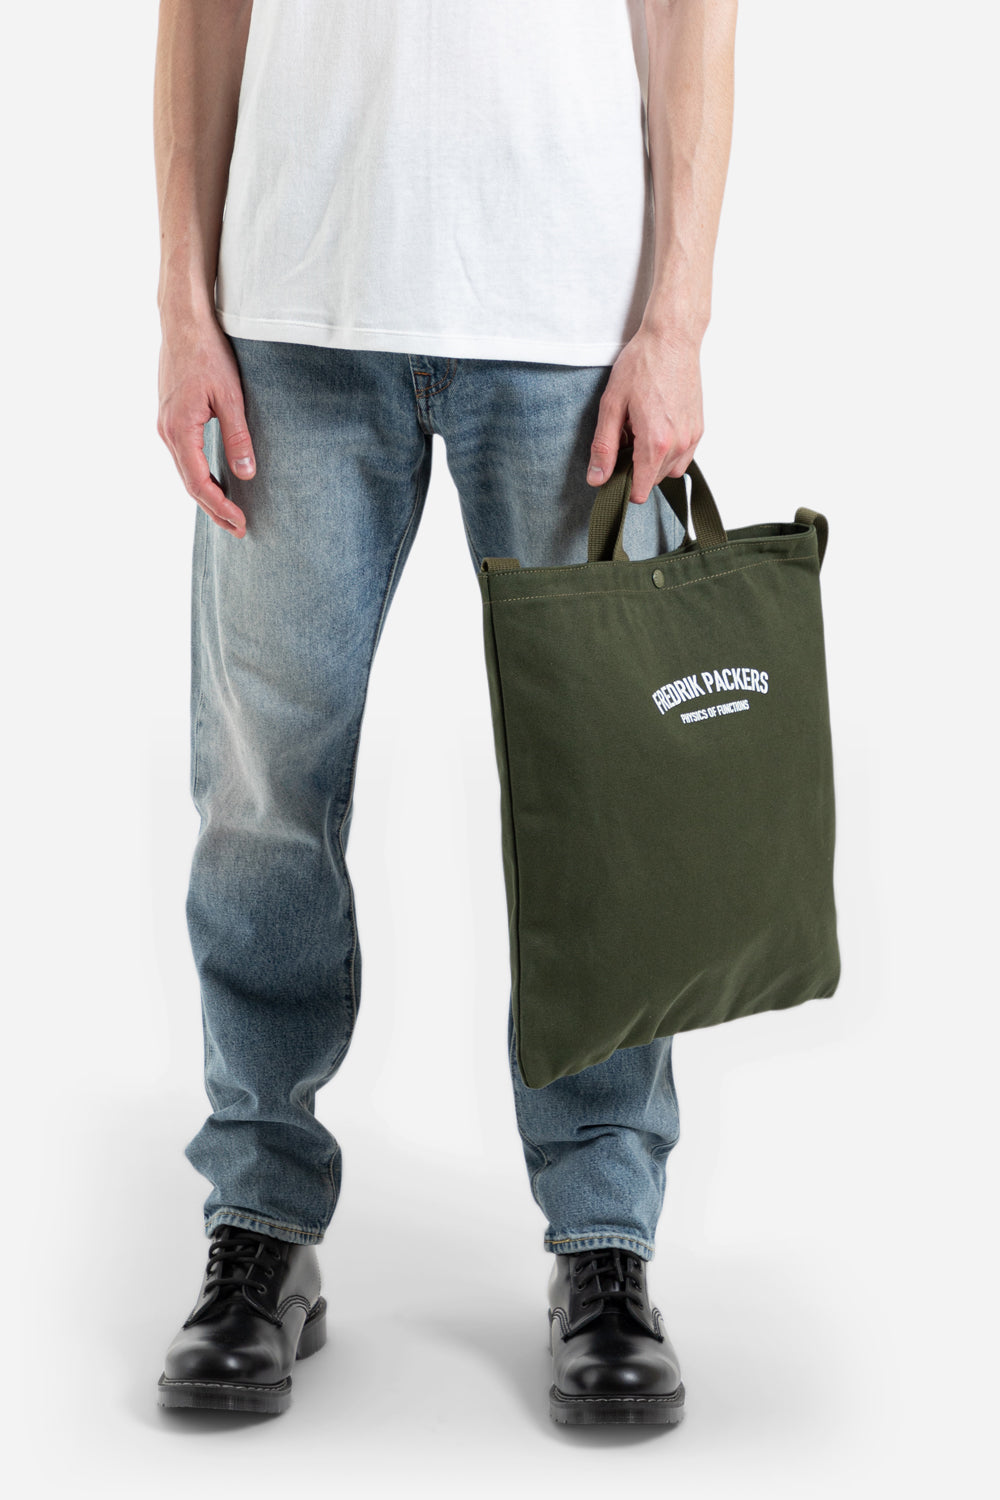 Fredrik_packers_duck-boots-shoulder-bag-olive